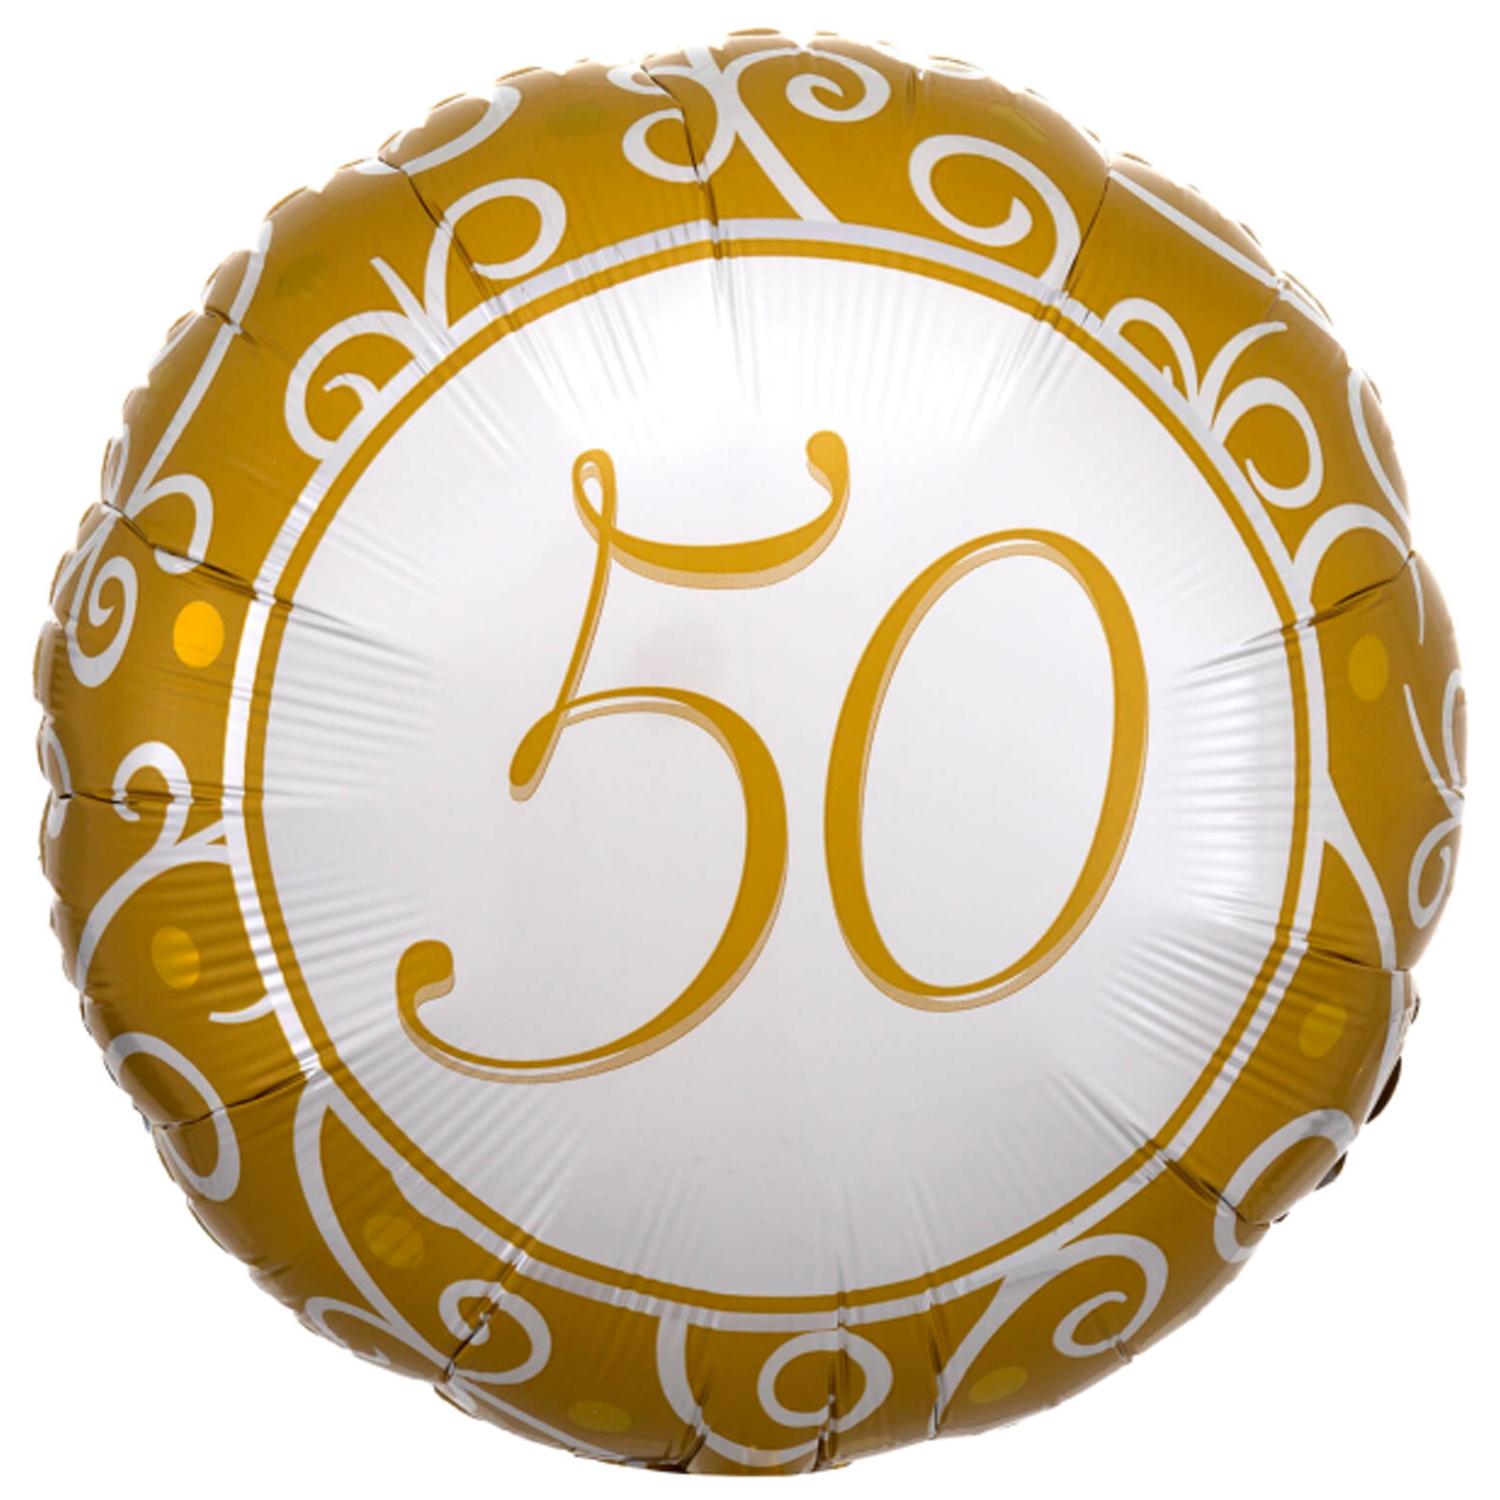 NEU Folienballon Goldhochzeit 50 Jahre, ca. 43 cm